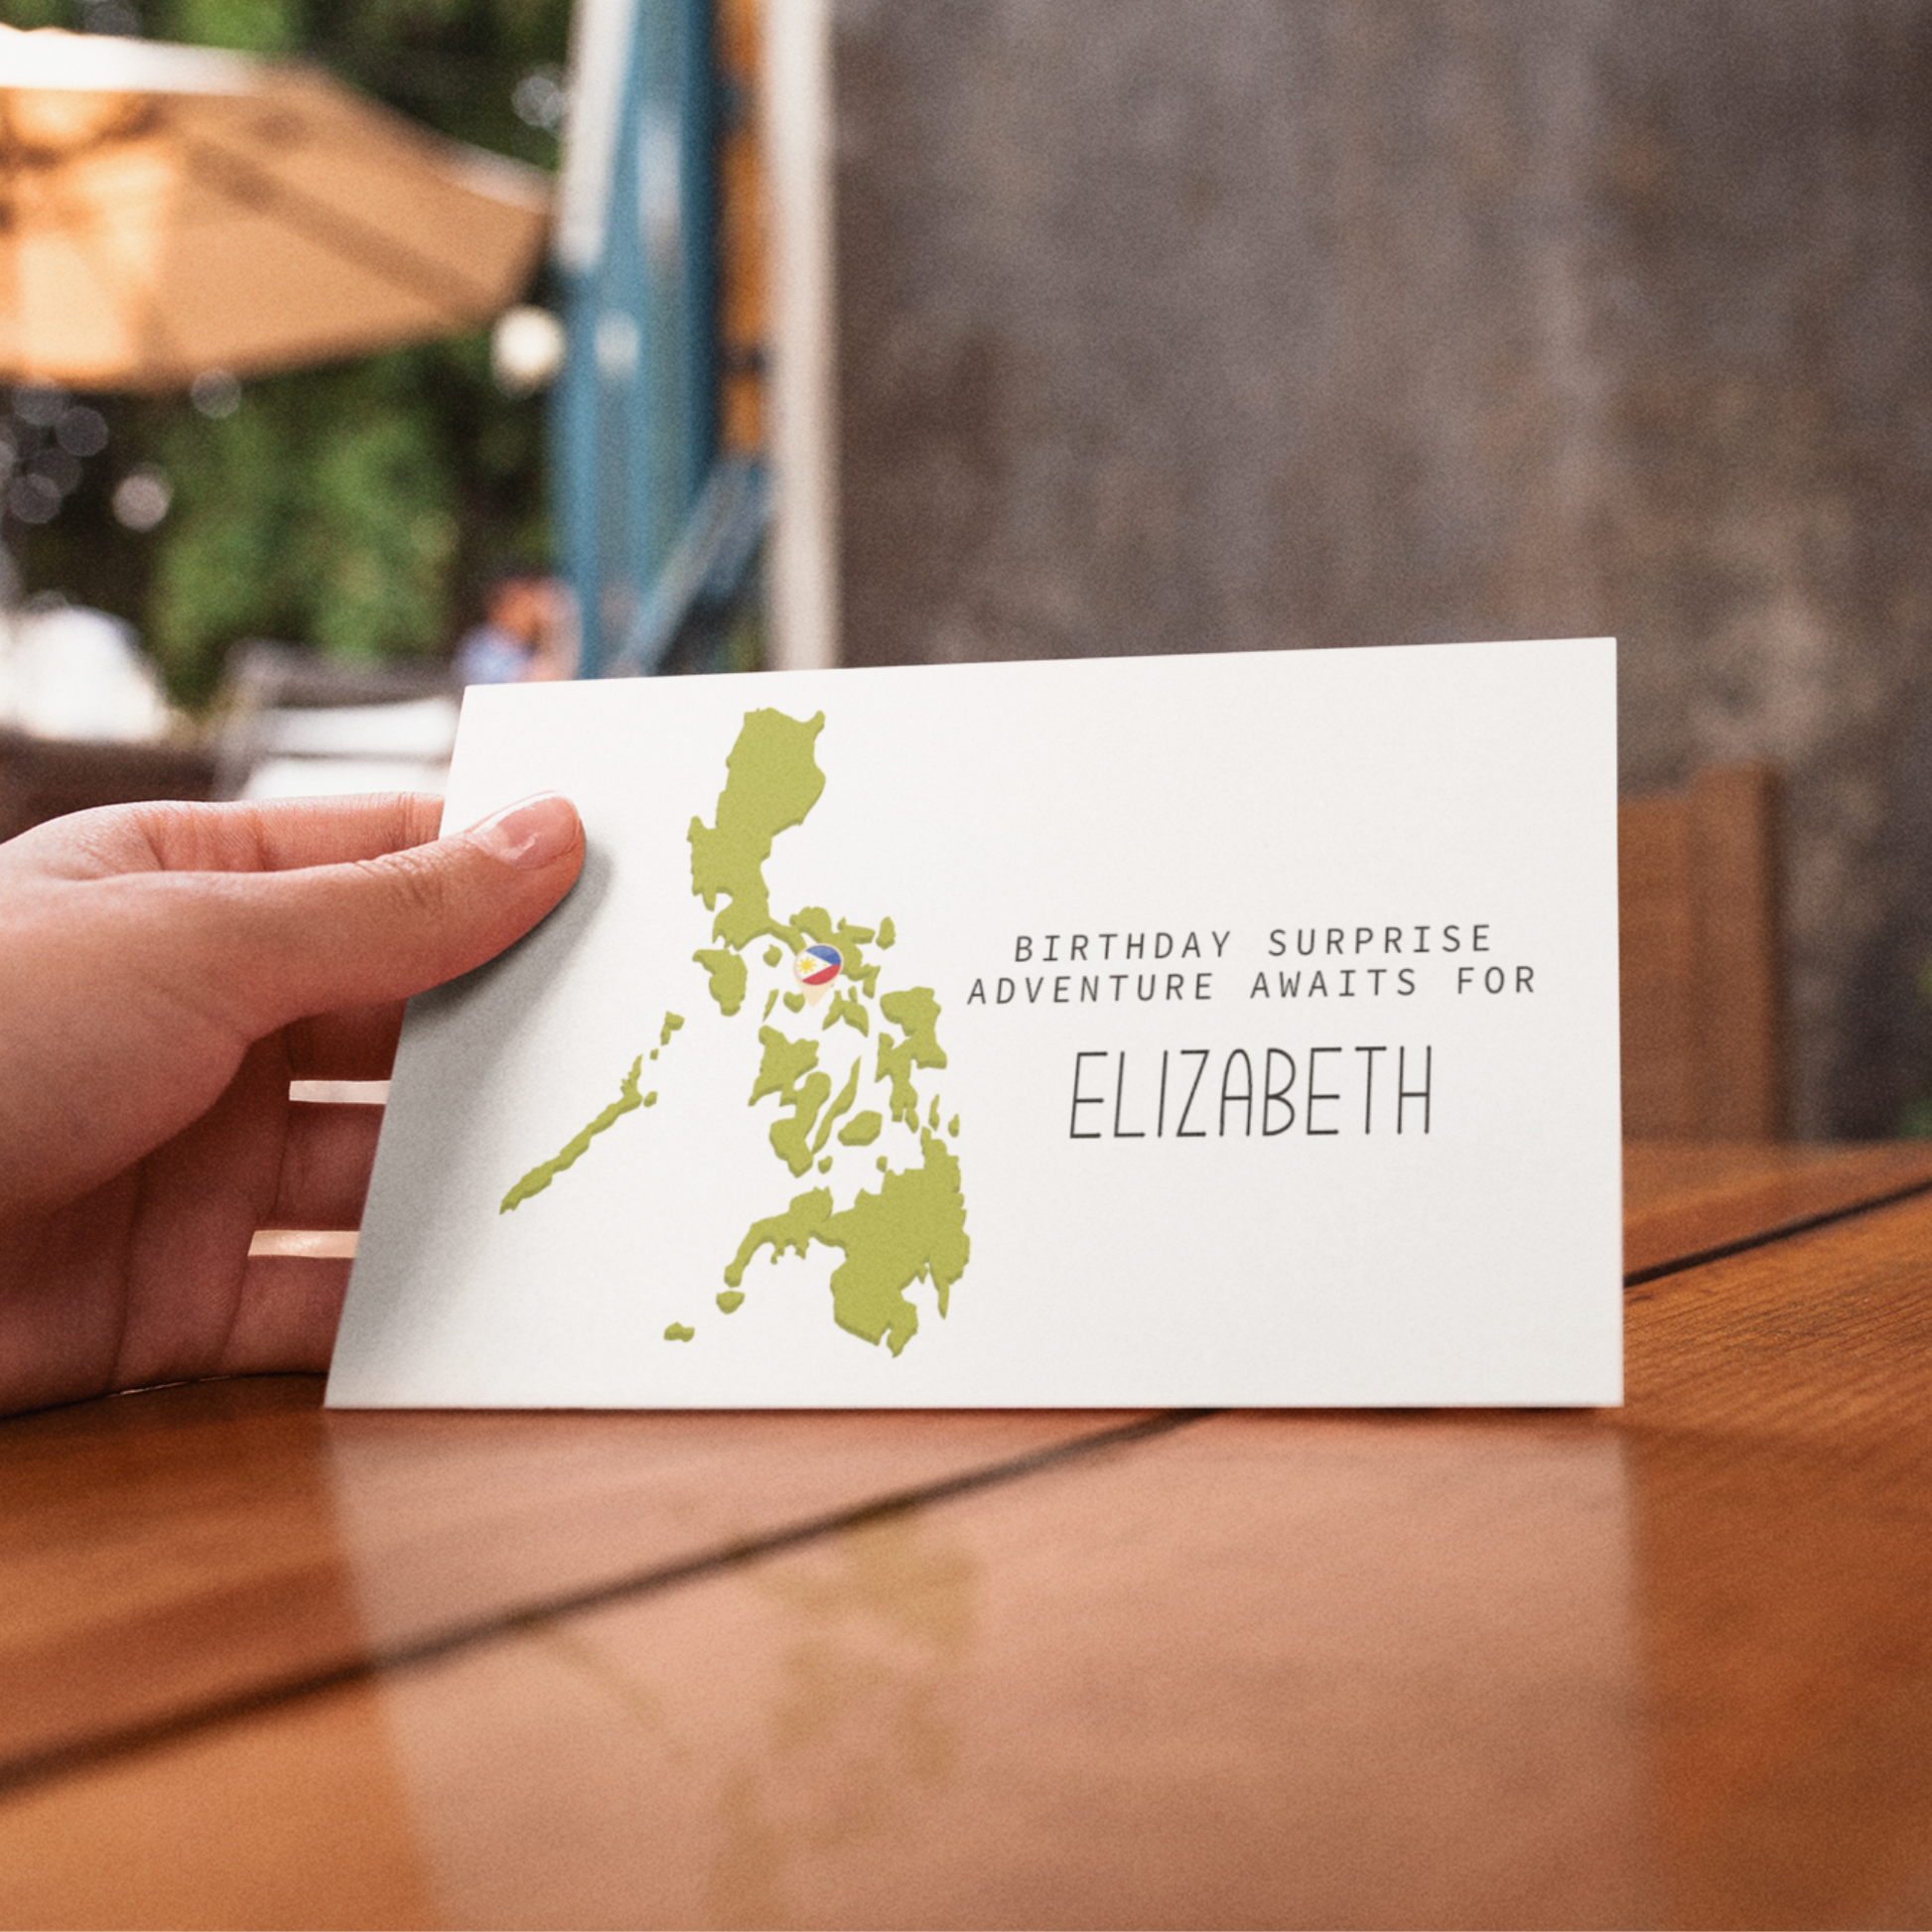 Filipino Greeting Cards